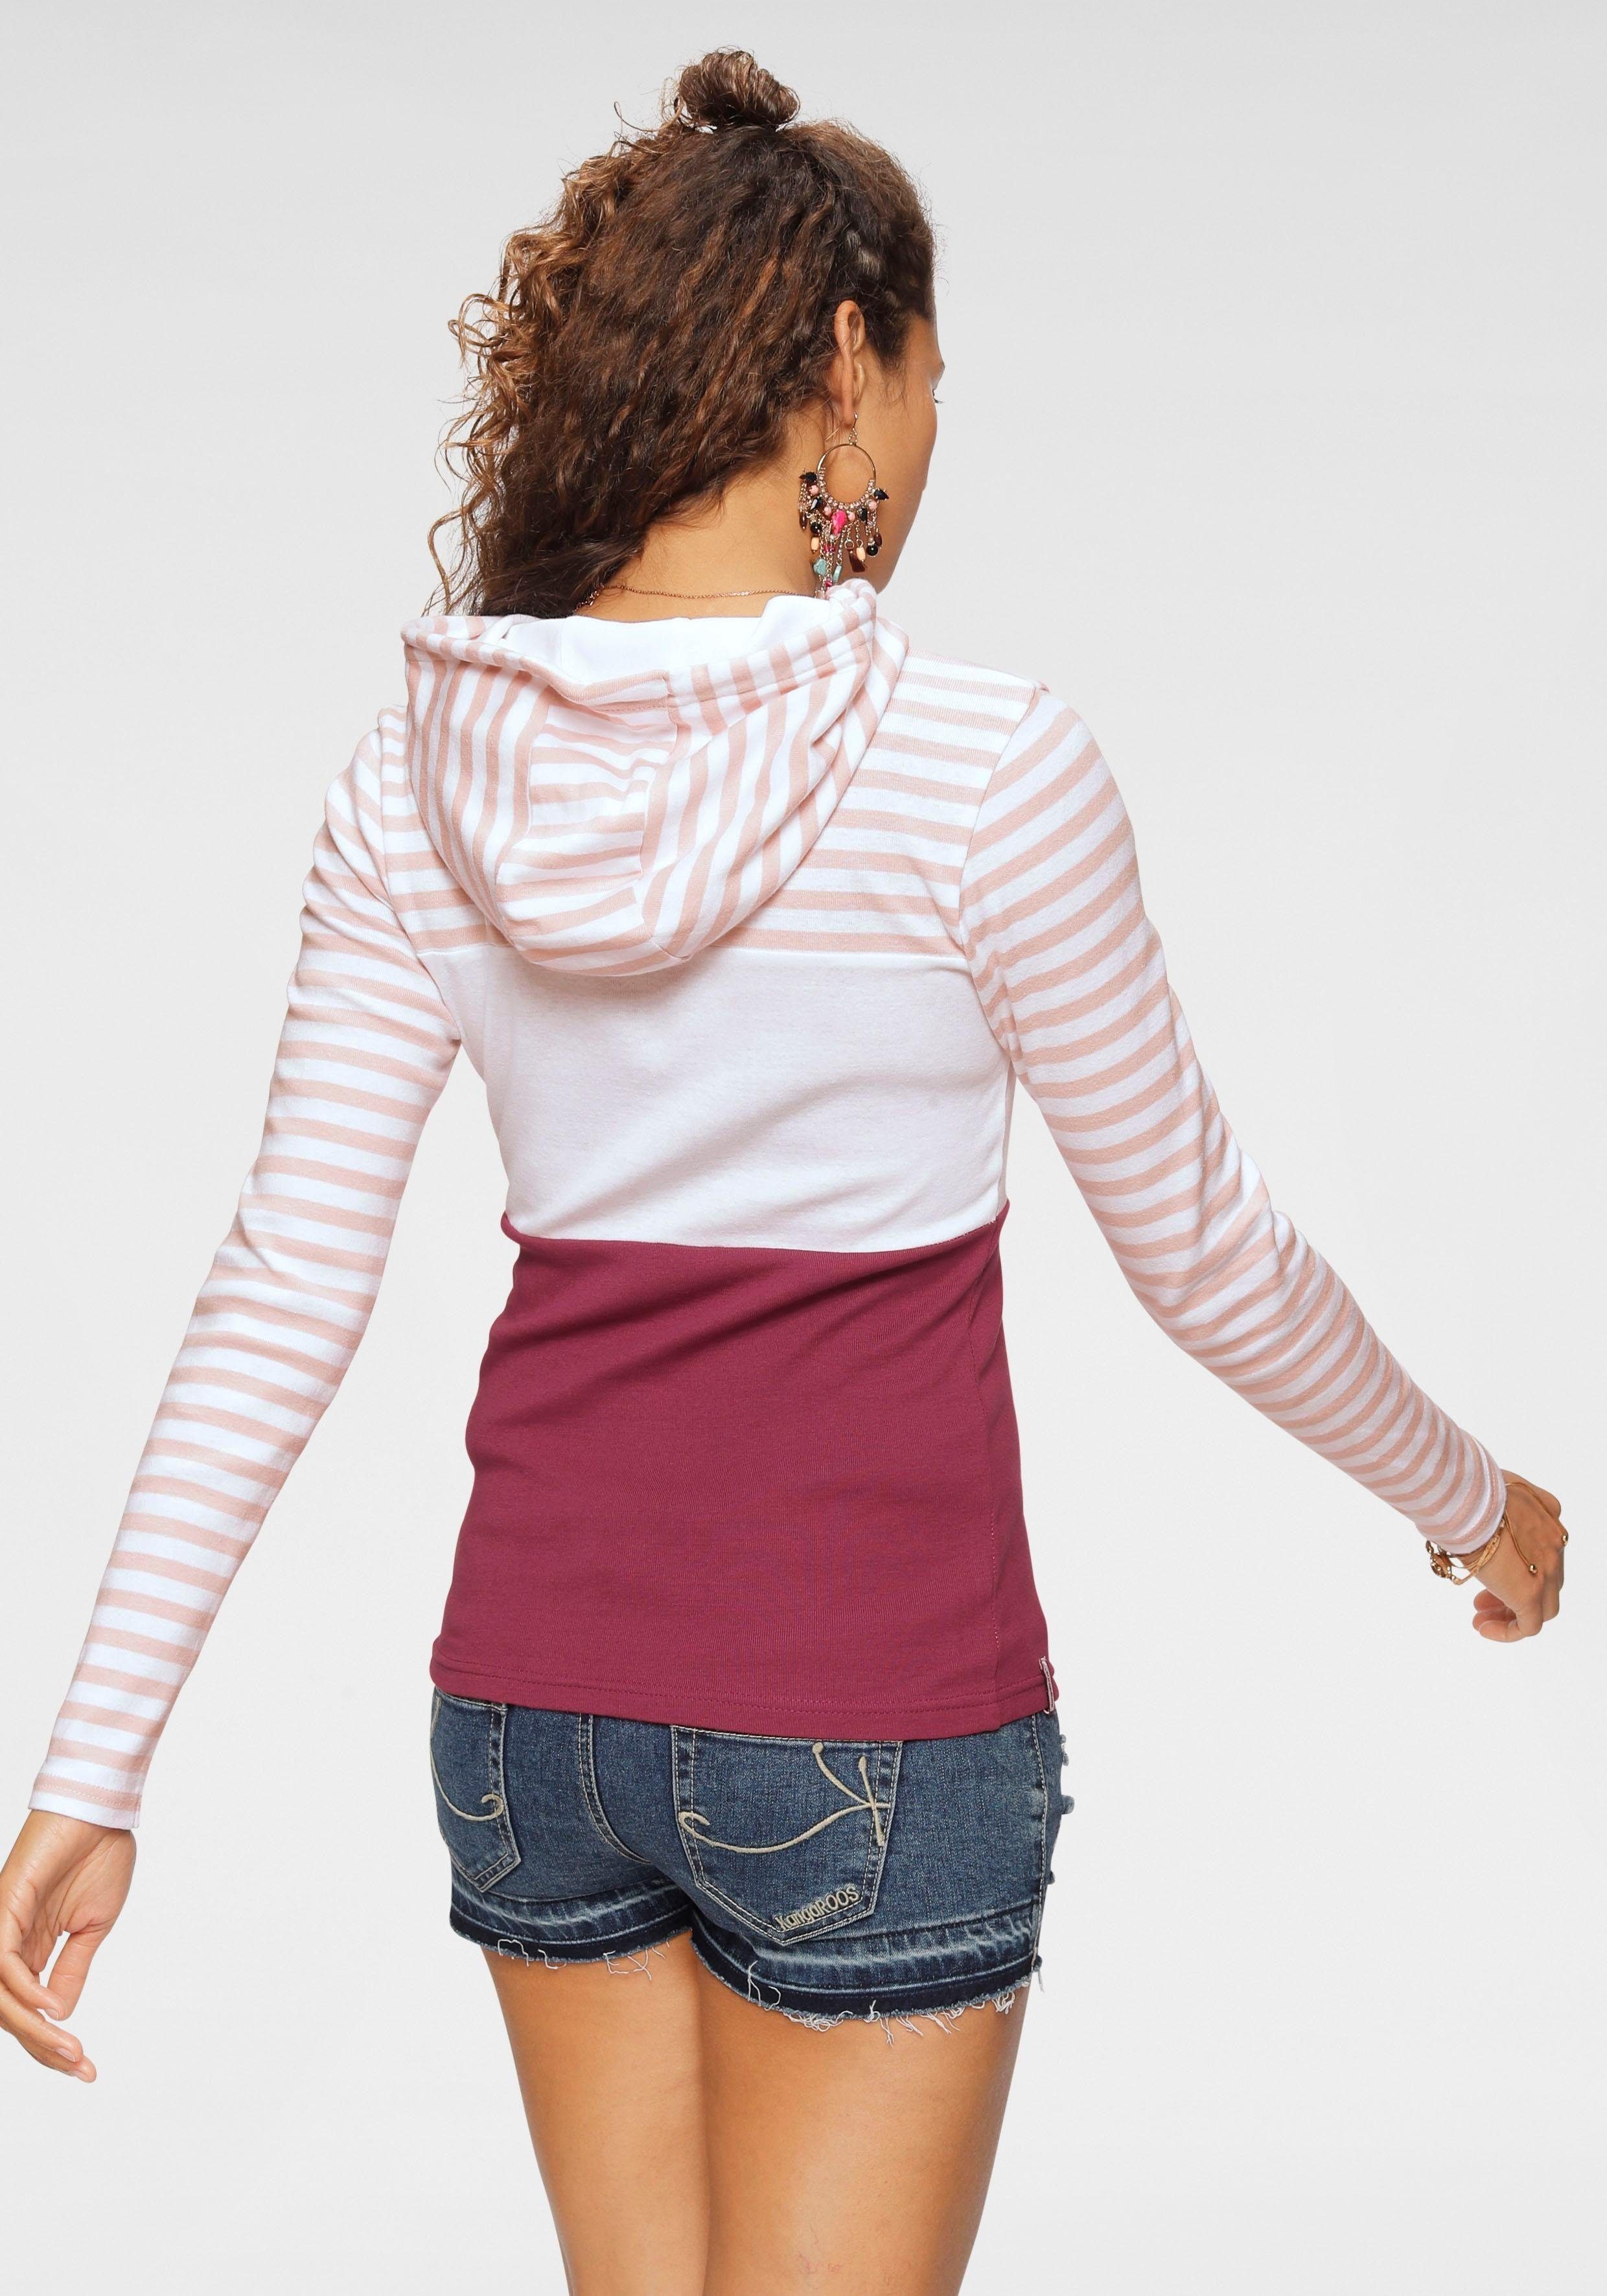 Design KangaROOS in verspielter rosa-weiß-bordeaux mit Kapuzenshirt Ringel-Optik Colorblocking